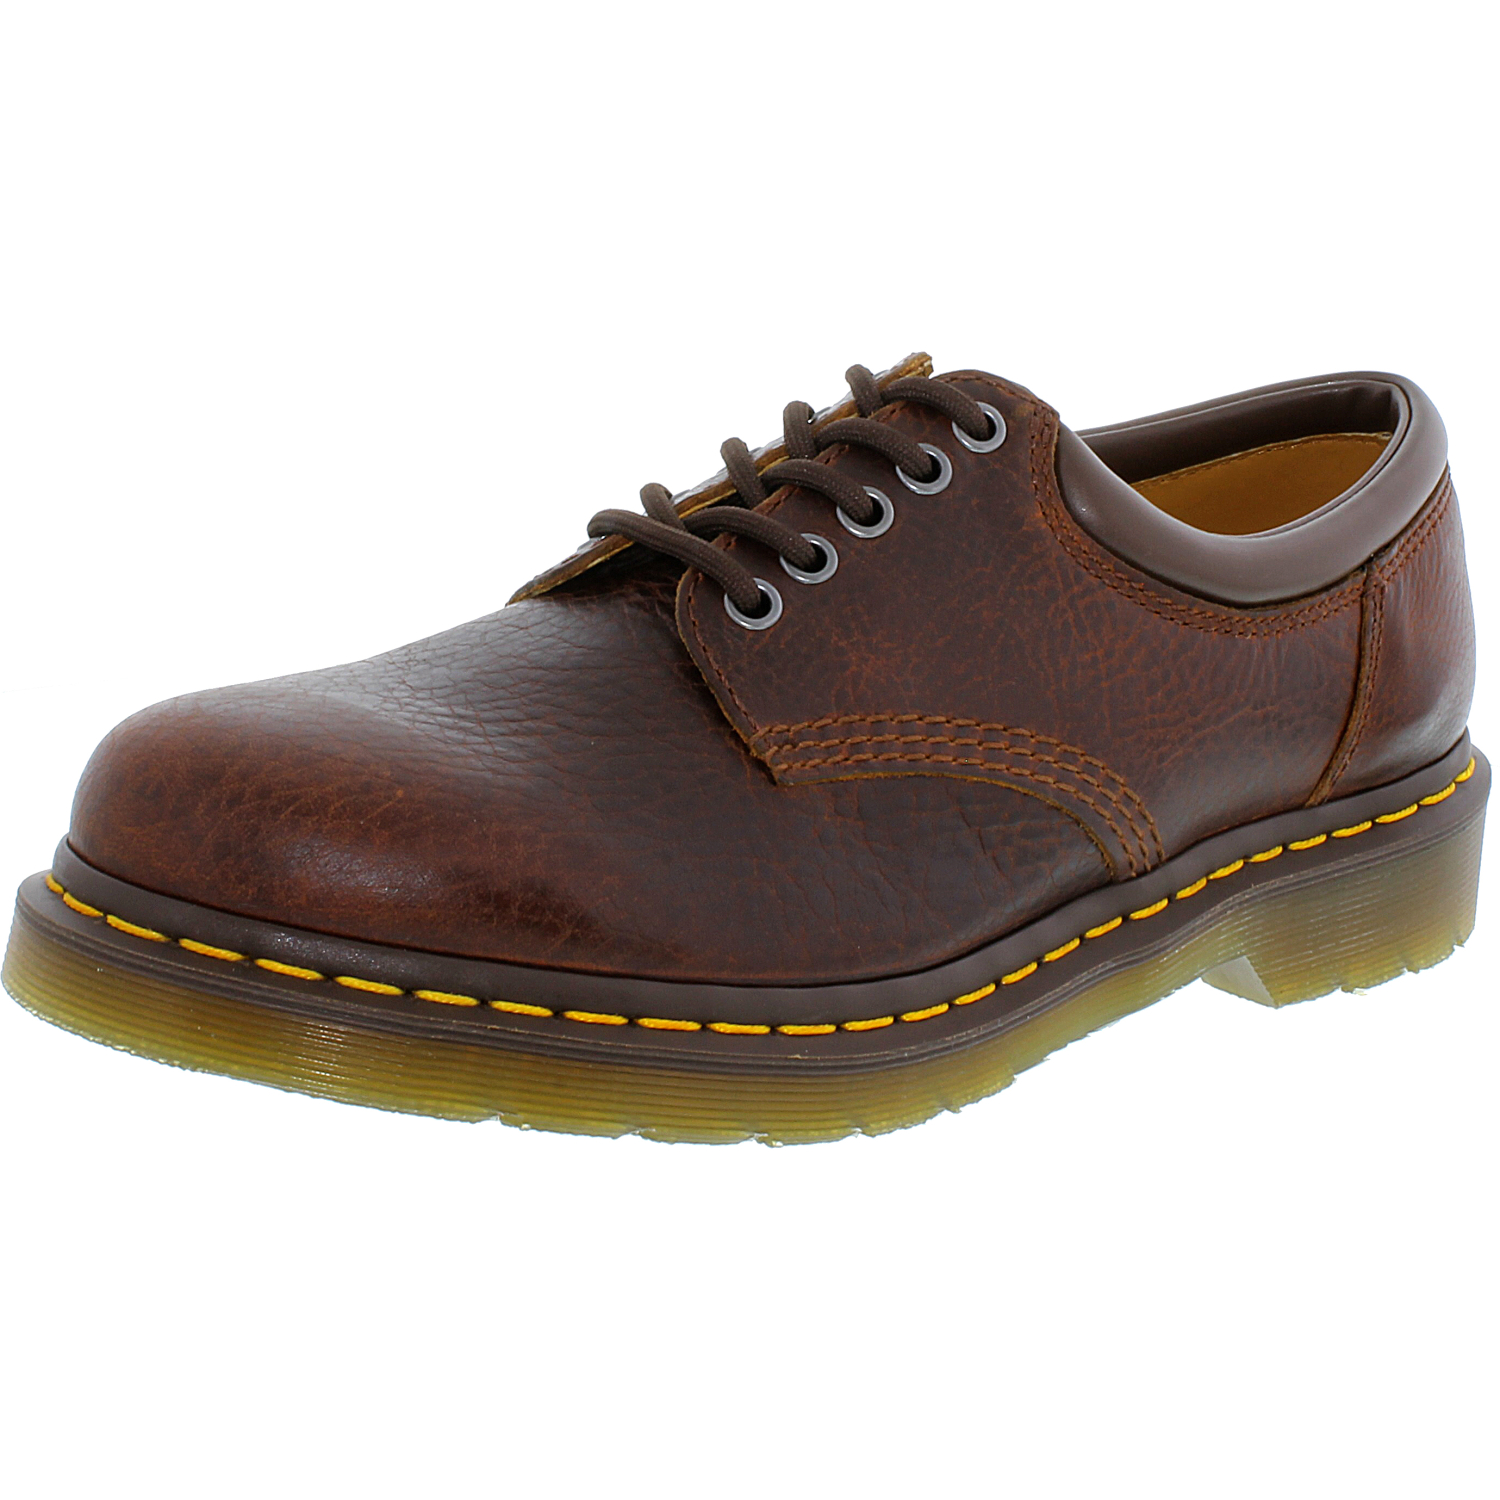 Dr. Martens Men's 8053 Lace-Up Ankle-High Leather Oxford Shoe | eBay